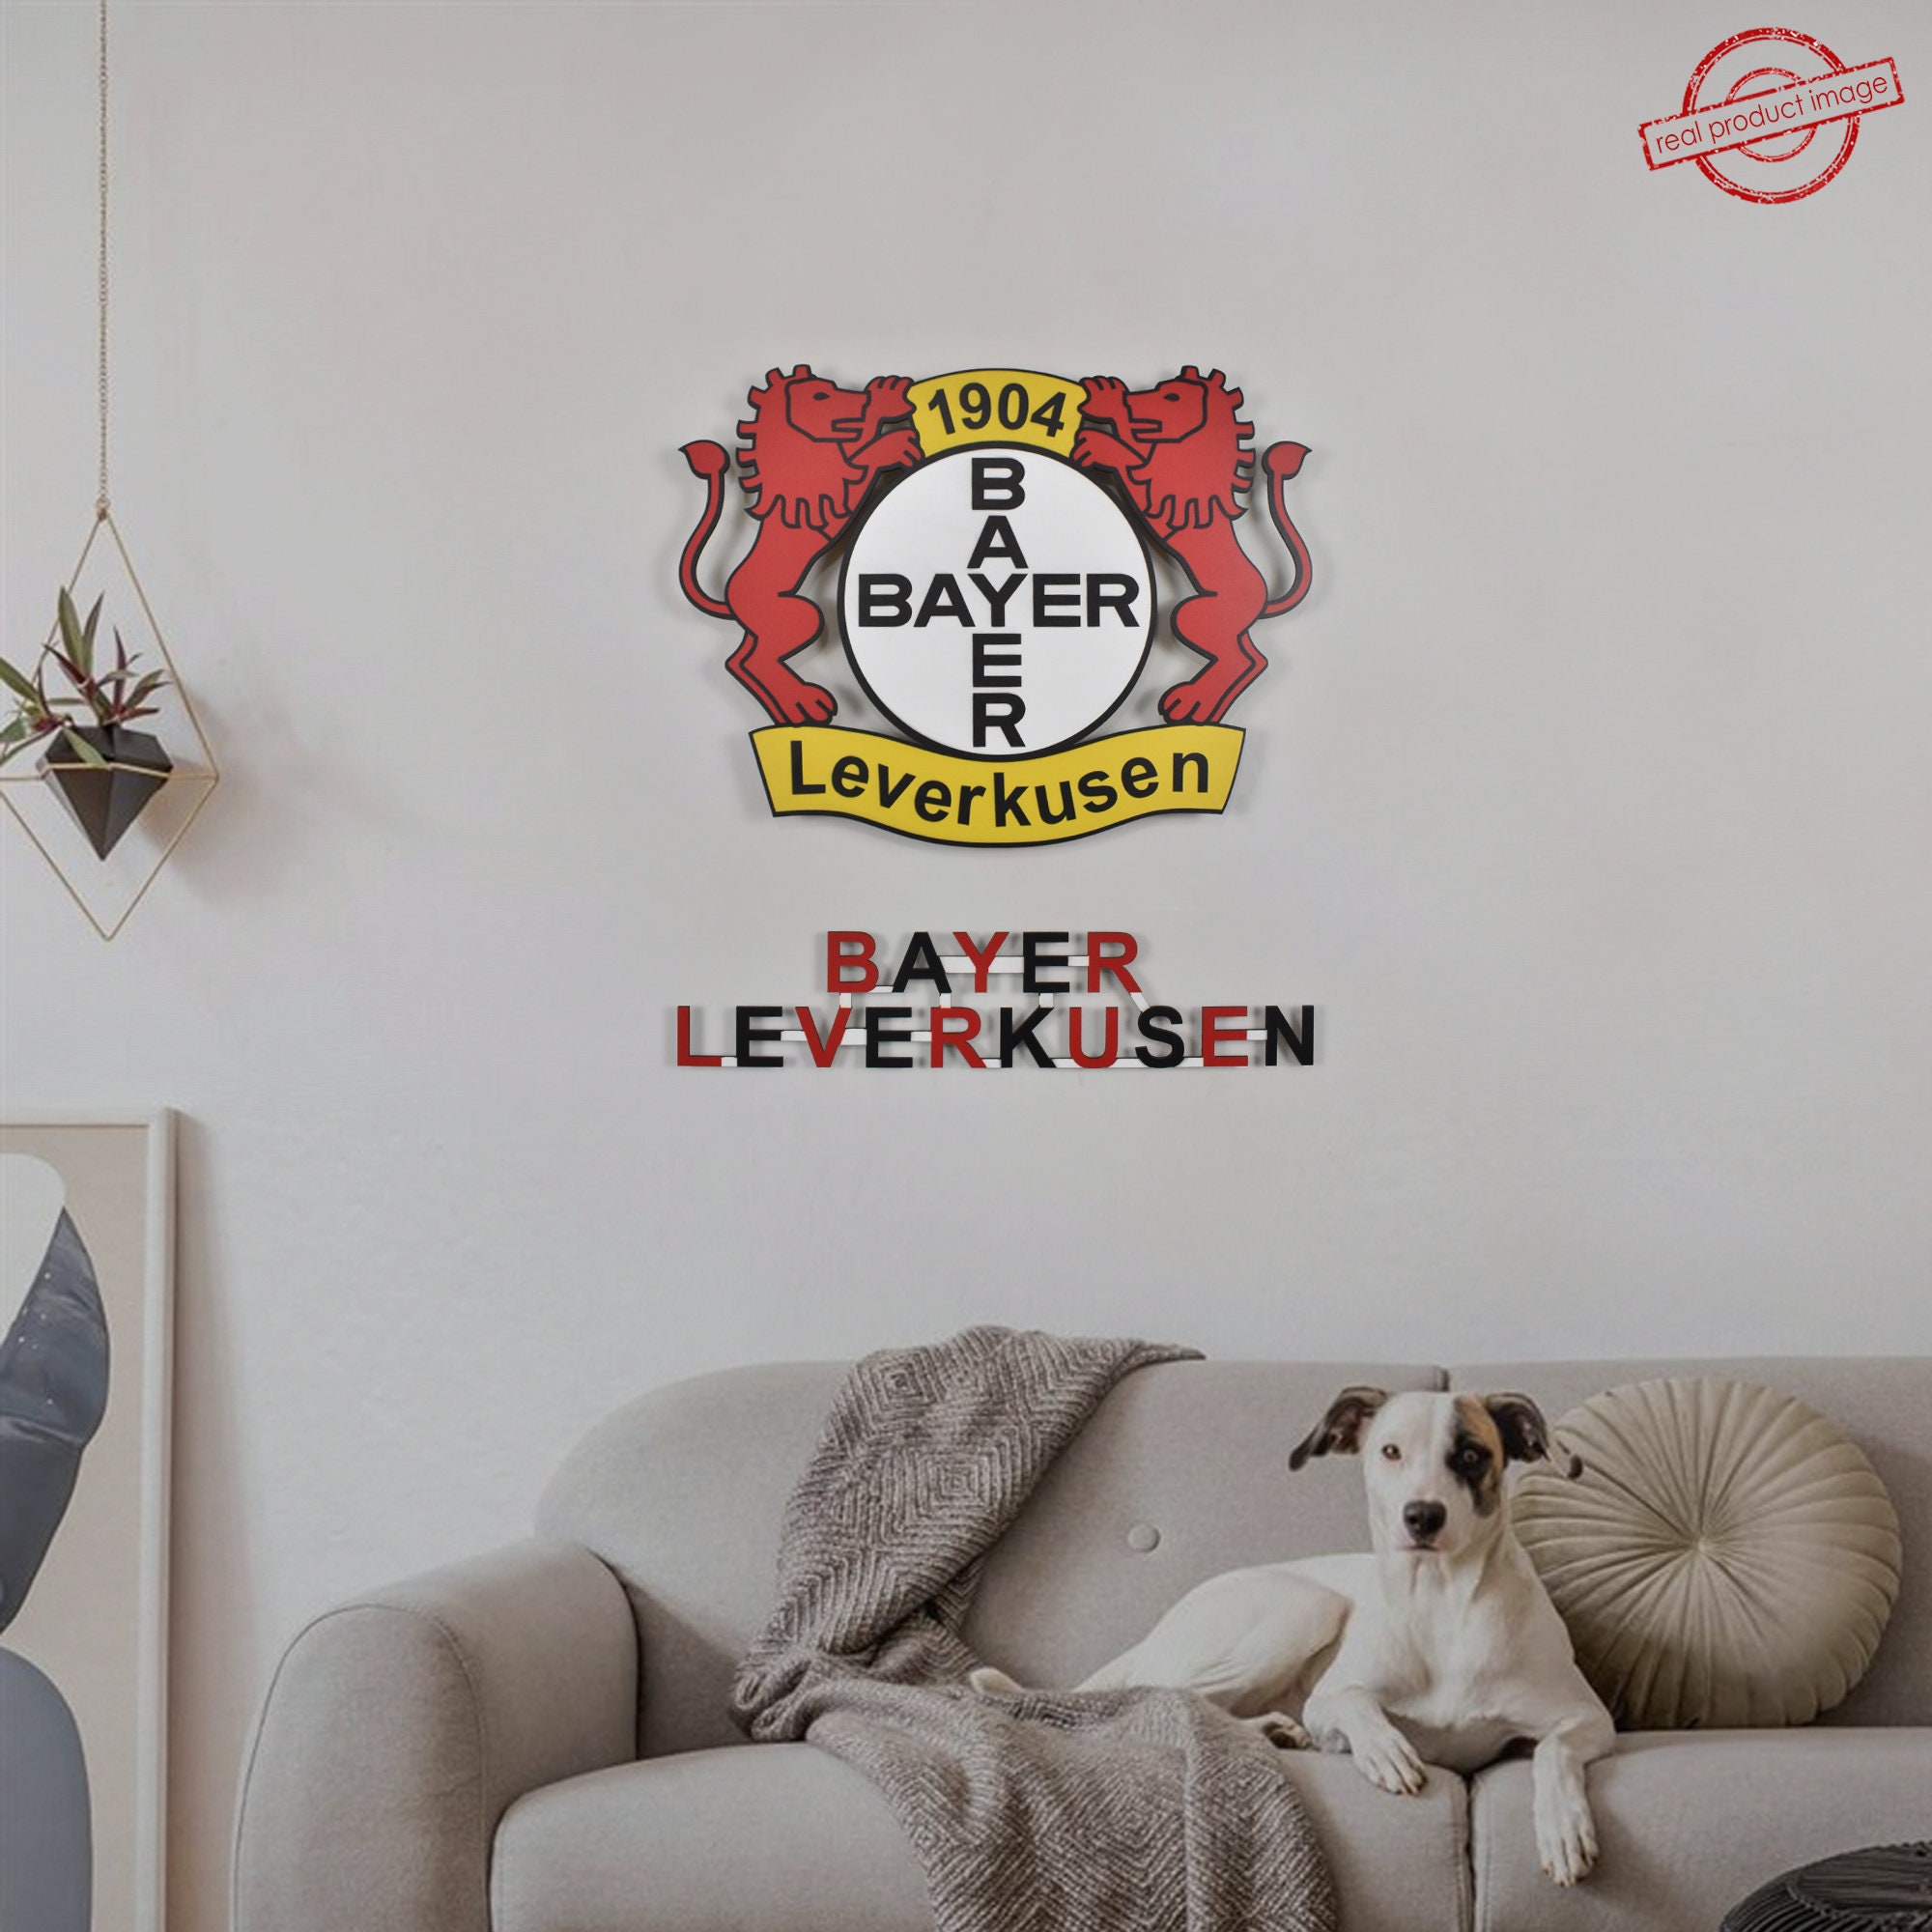 Bayer Leverkusen Team Logo. Wall Art Bayer Leverkusen.for Wall - Etsy  Ireland